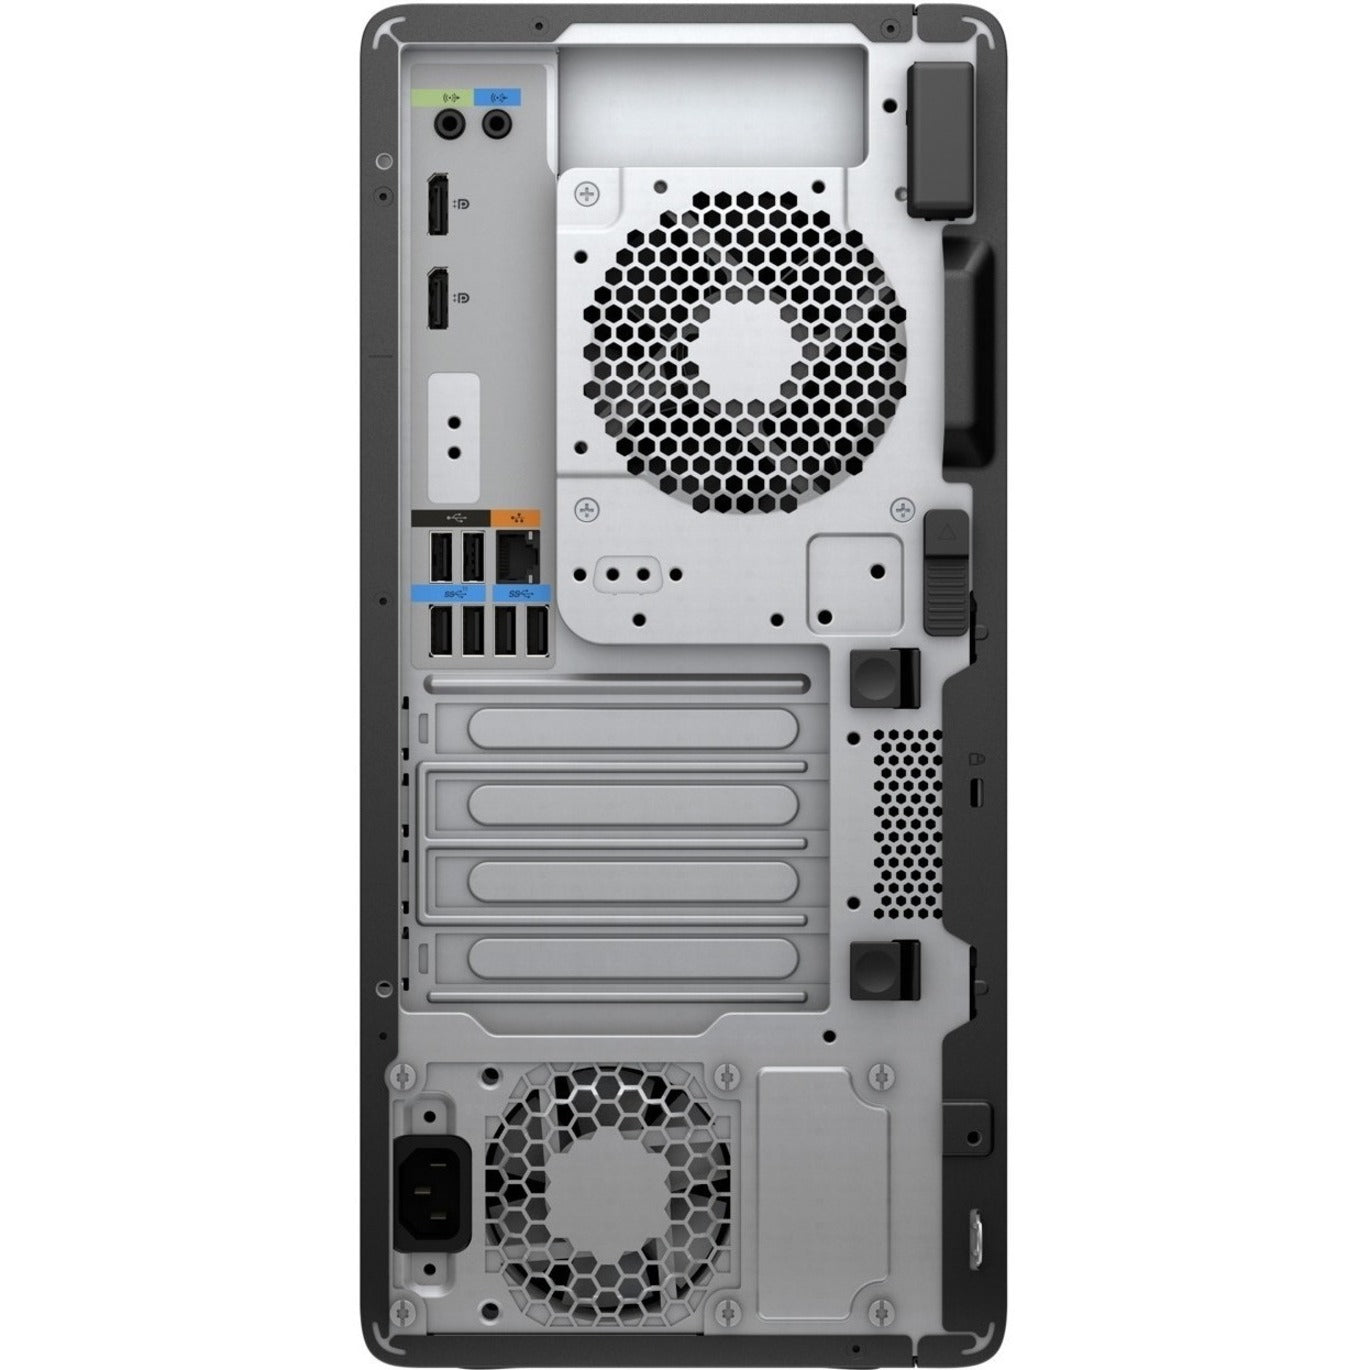 HP Z2 Tower G5 Workstation, Intel Core i5 Hexa-core, 16GB RAM, 512GB SSD, Windows 11 Pro